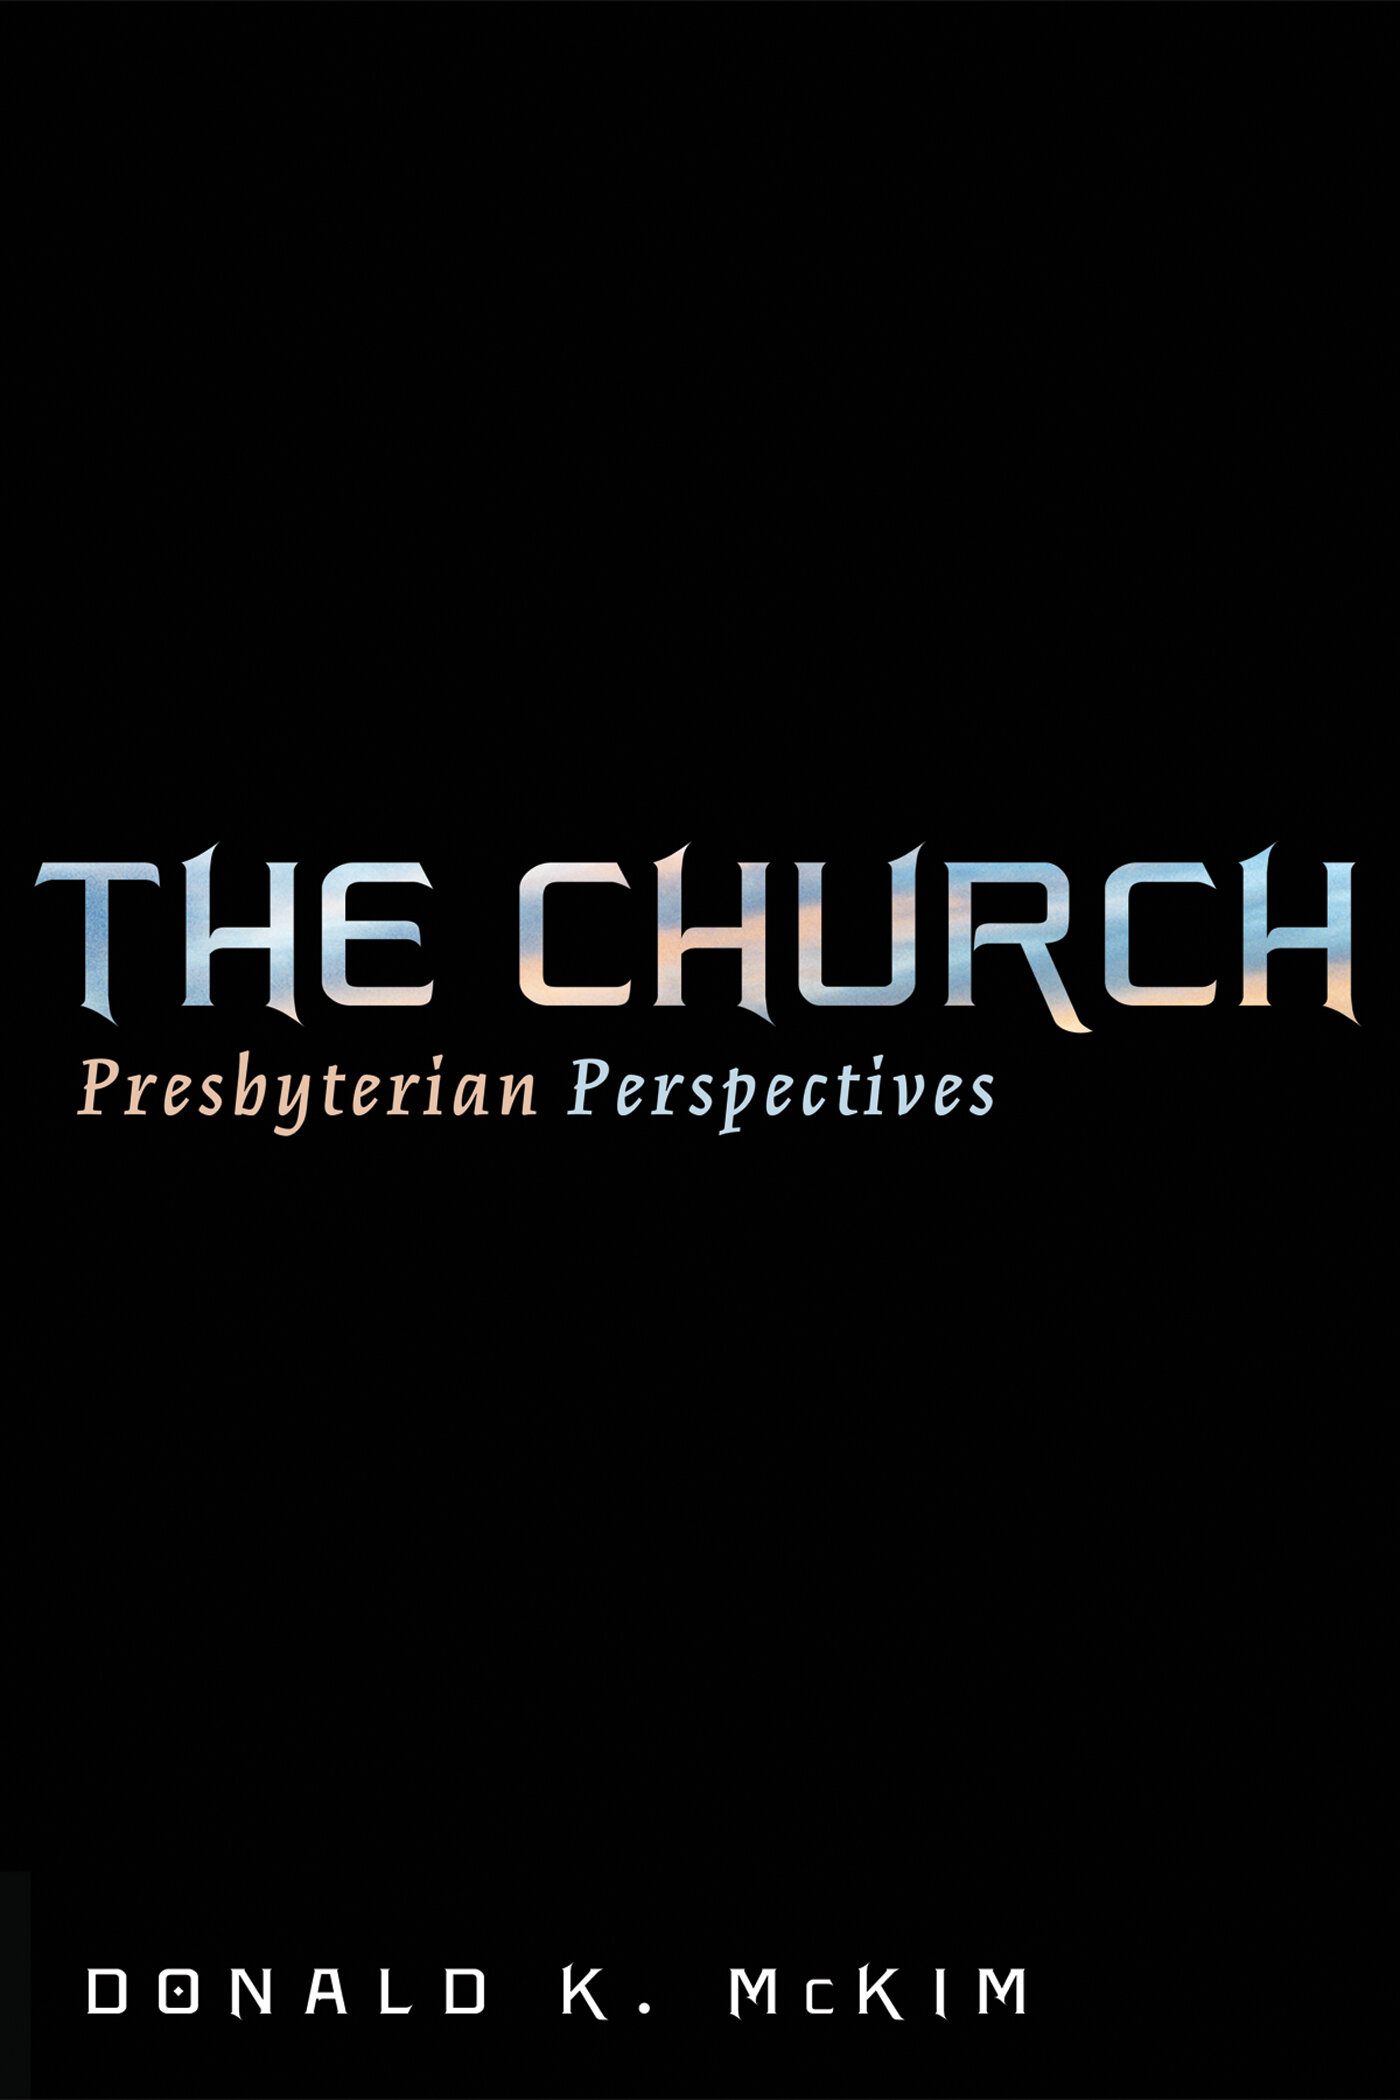 The Church: Presbyterian Perspectives